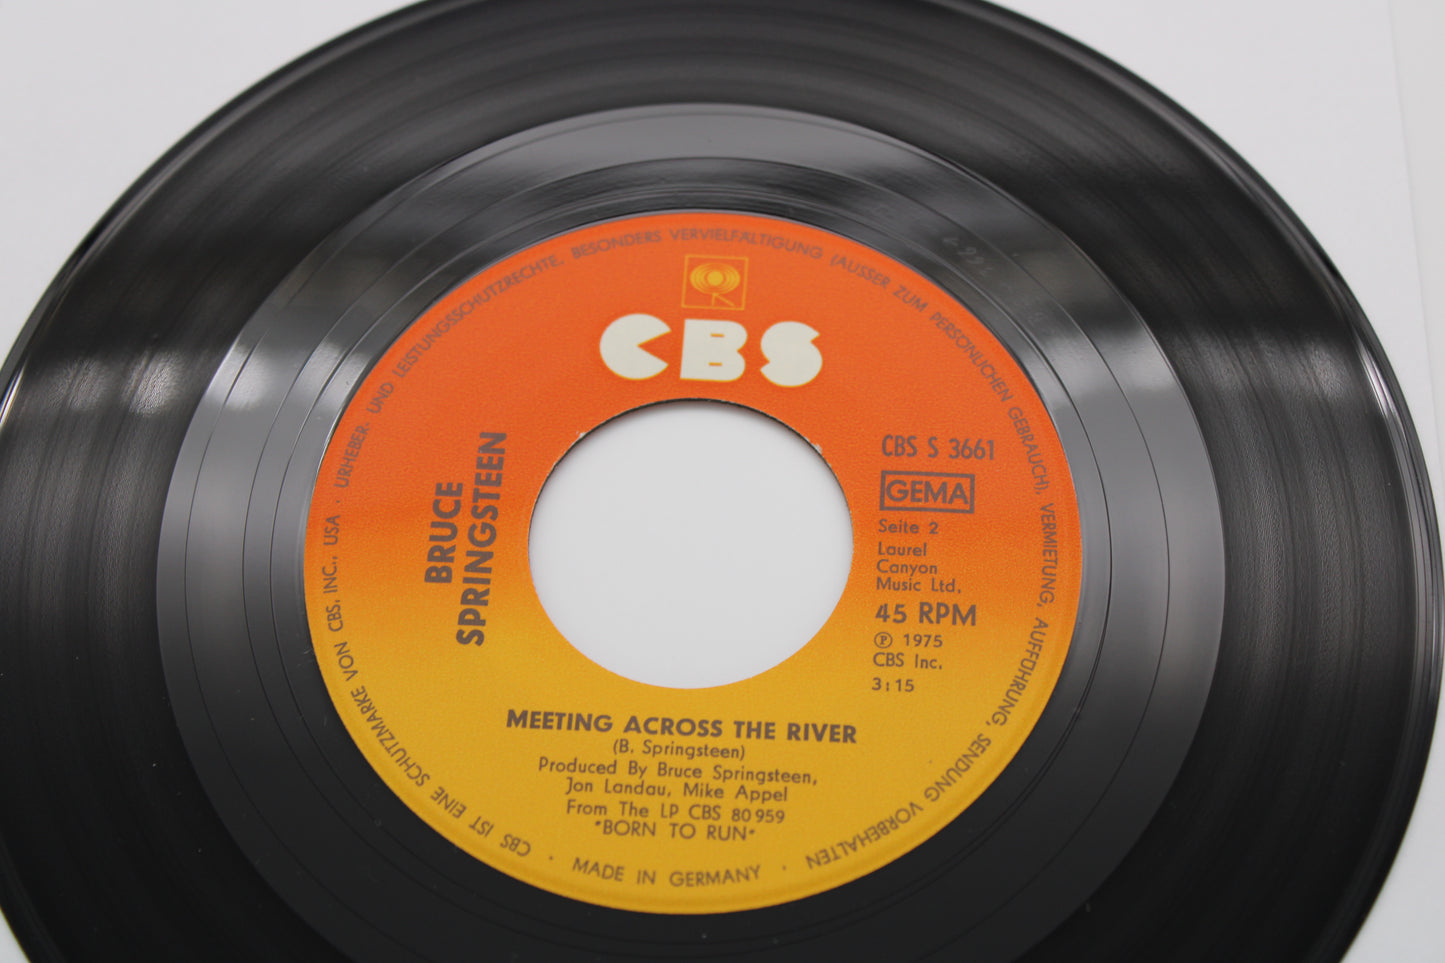 Bruce Springsteen 45 Record 7" Vinyl  Born to Run 1976 German Import